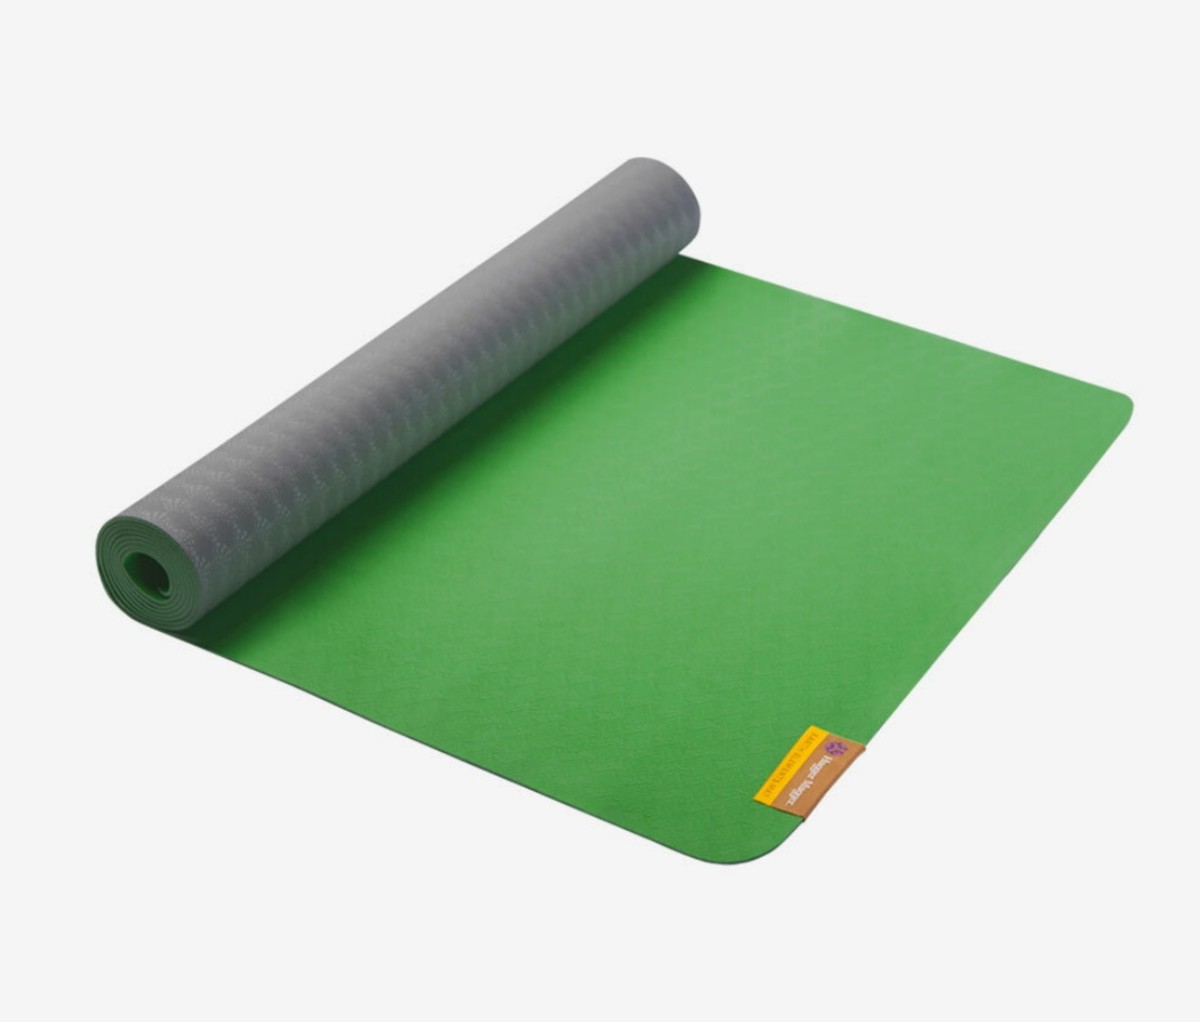 Hugger Mugger Earth Elements 5 mm Yoga Mat - Grippy Texture, Reversible,  Cushion, Non-toxic Biodegradeable Material, Lightweight